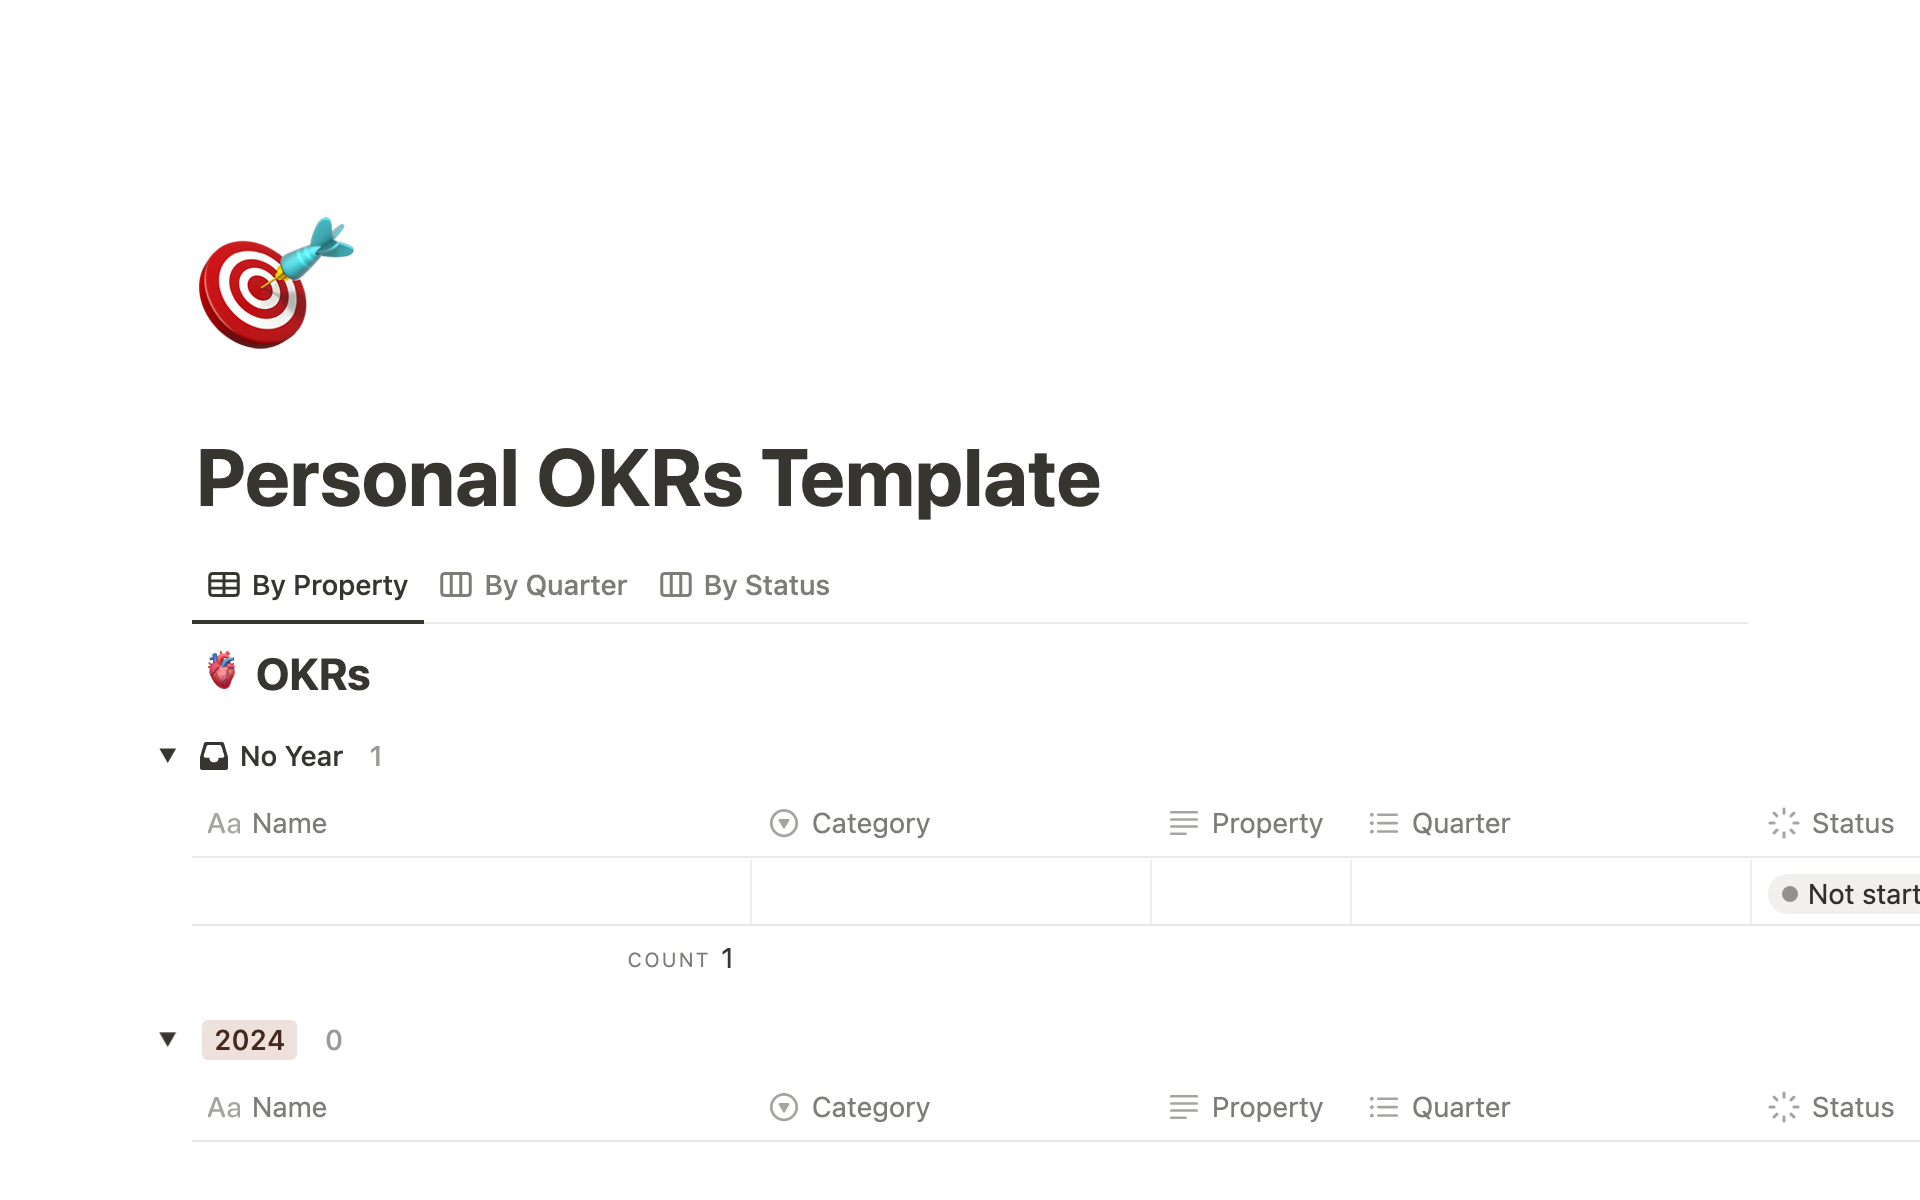 Vista previa de una plantilla para Personal OKRs